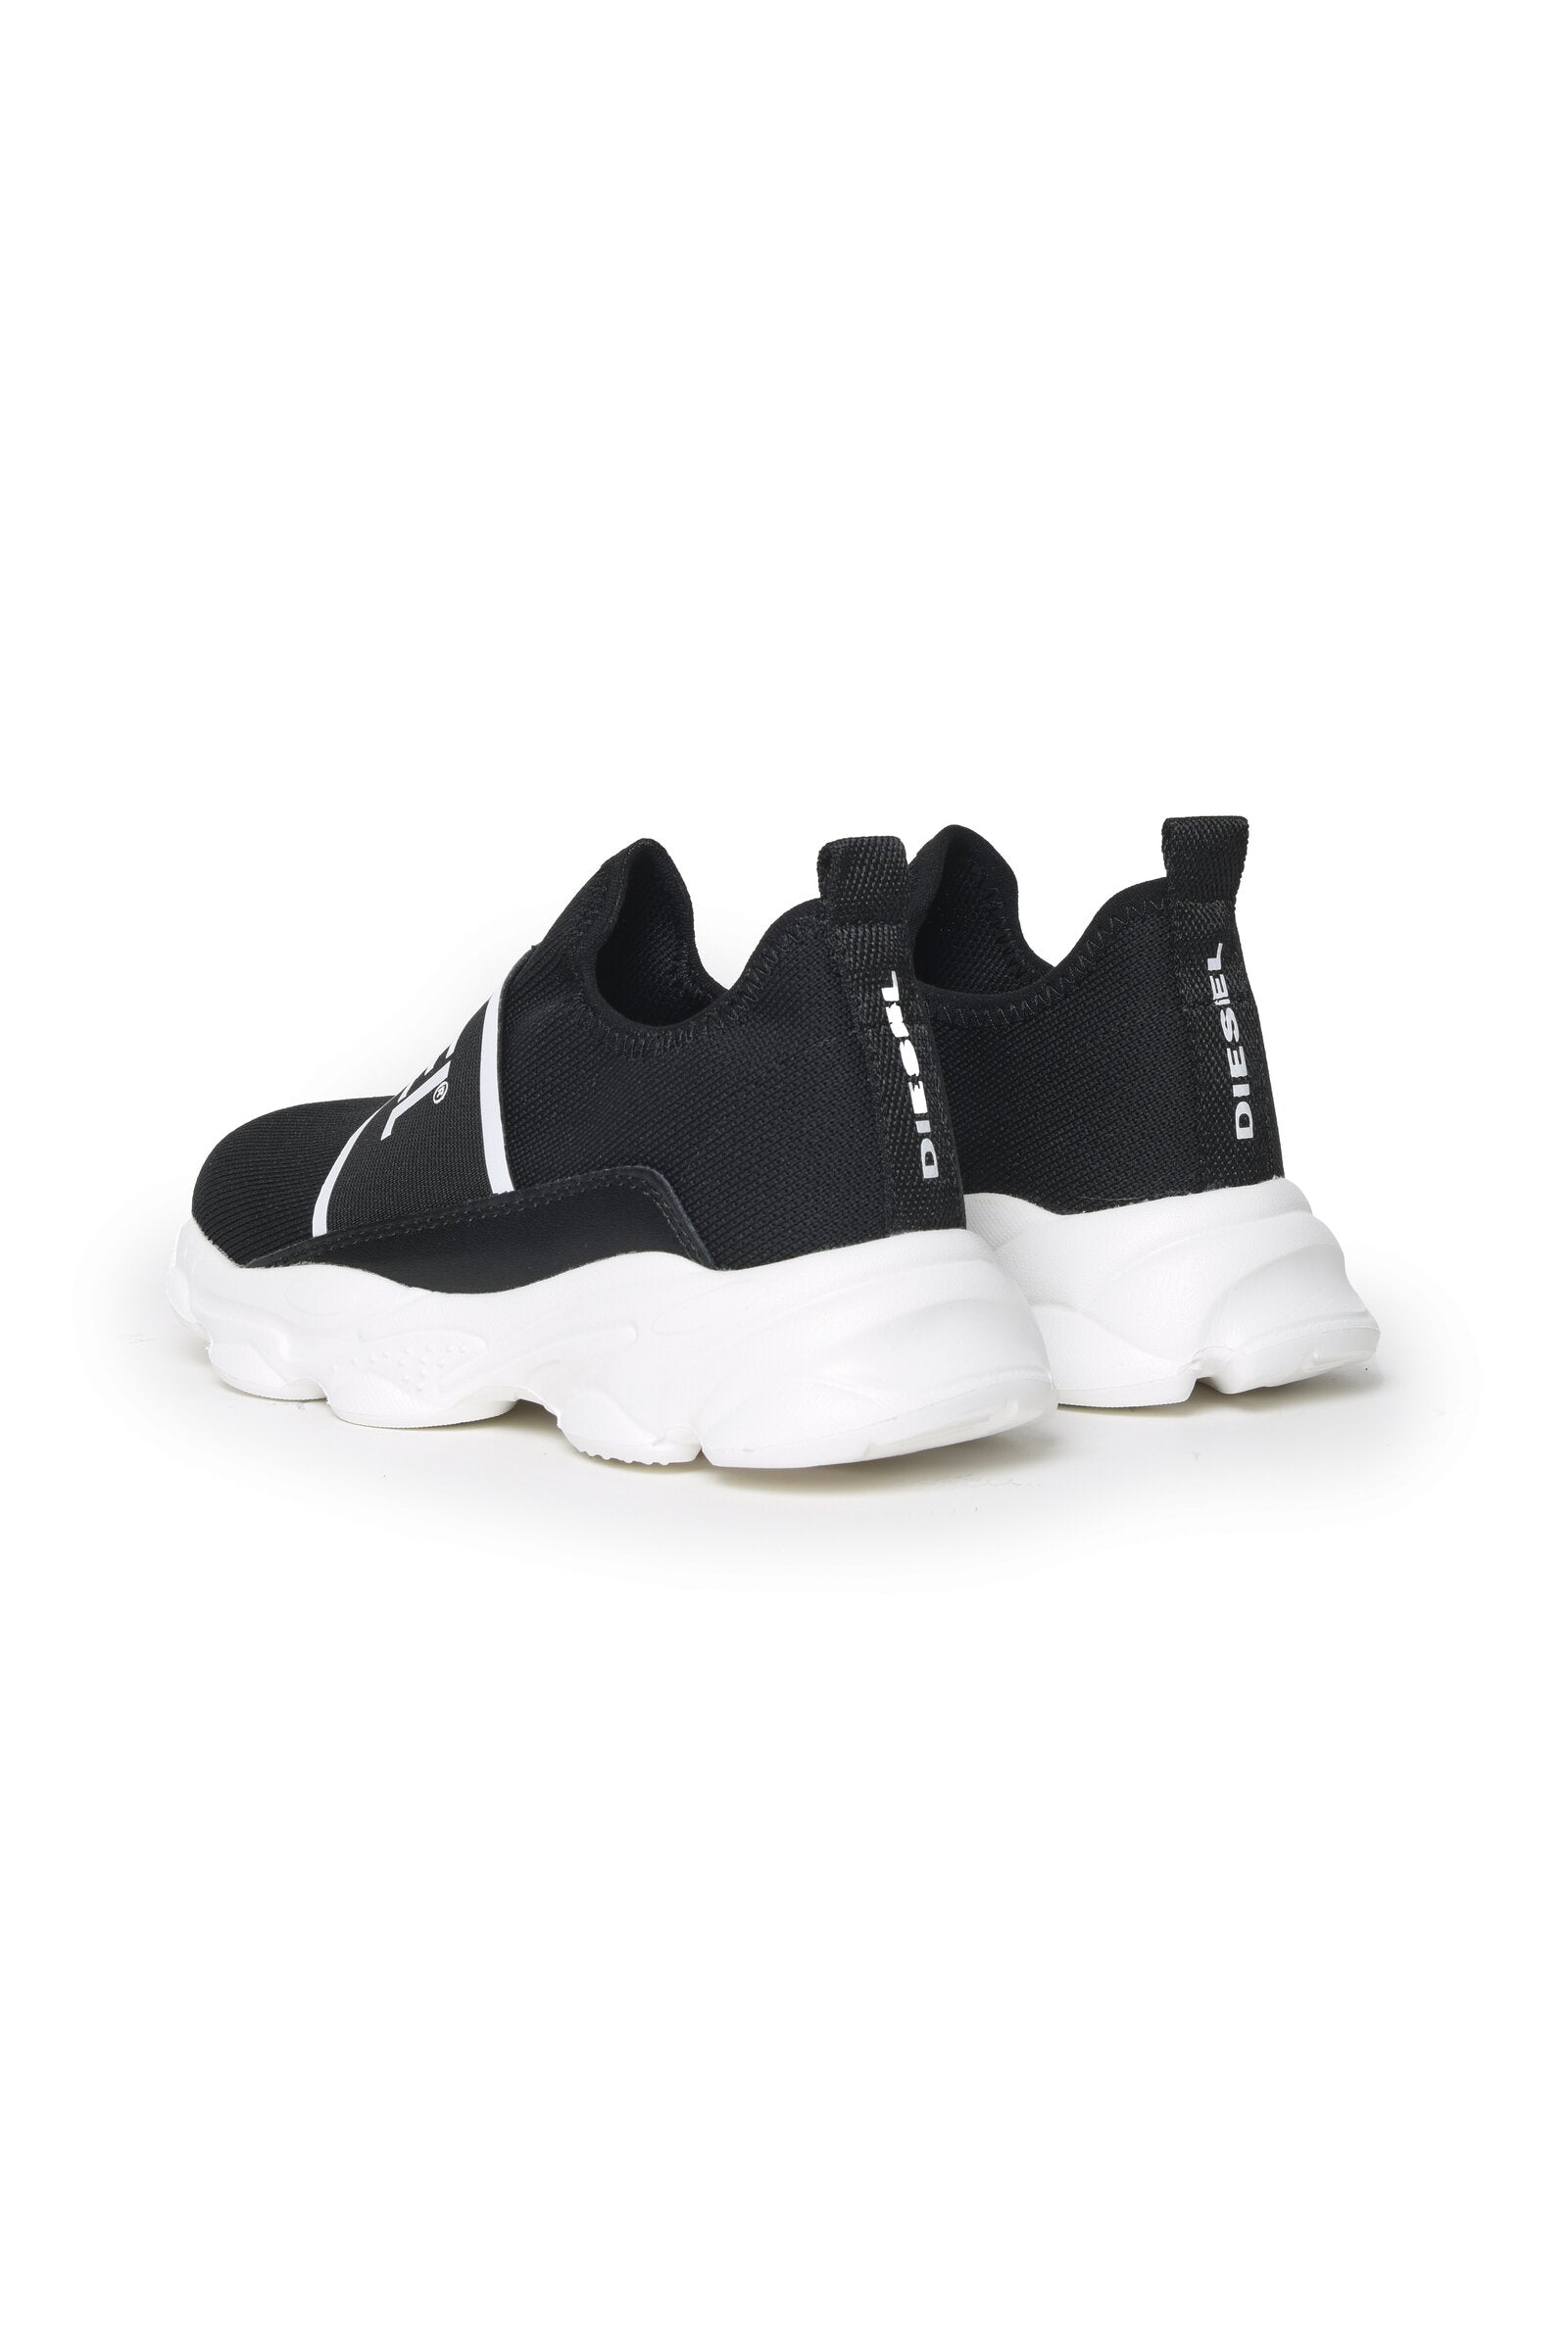 Diesel Serendipity black high sock sneakers with white logo for children